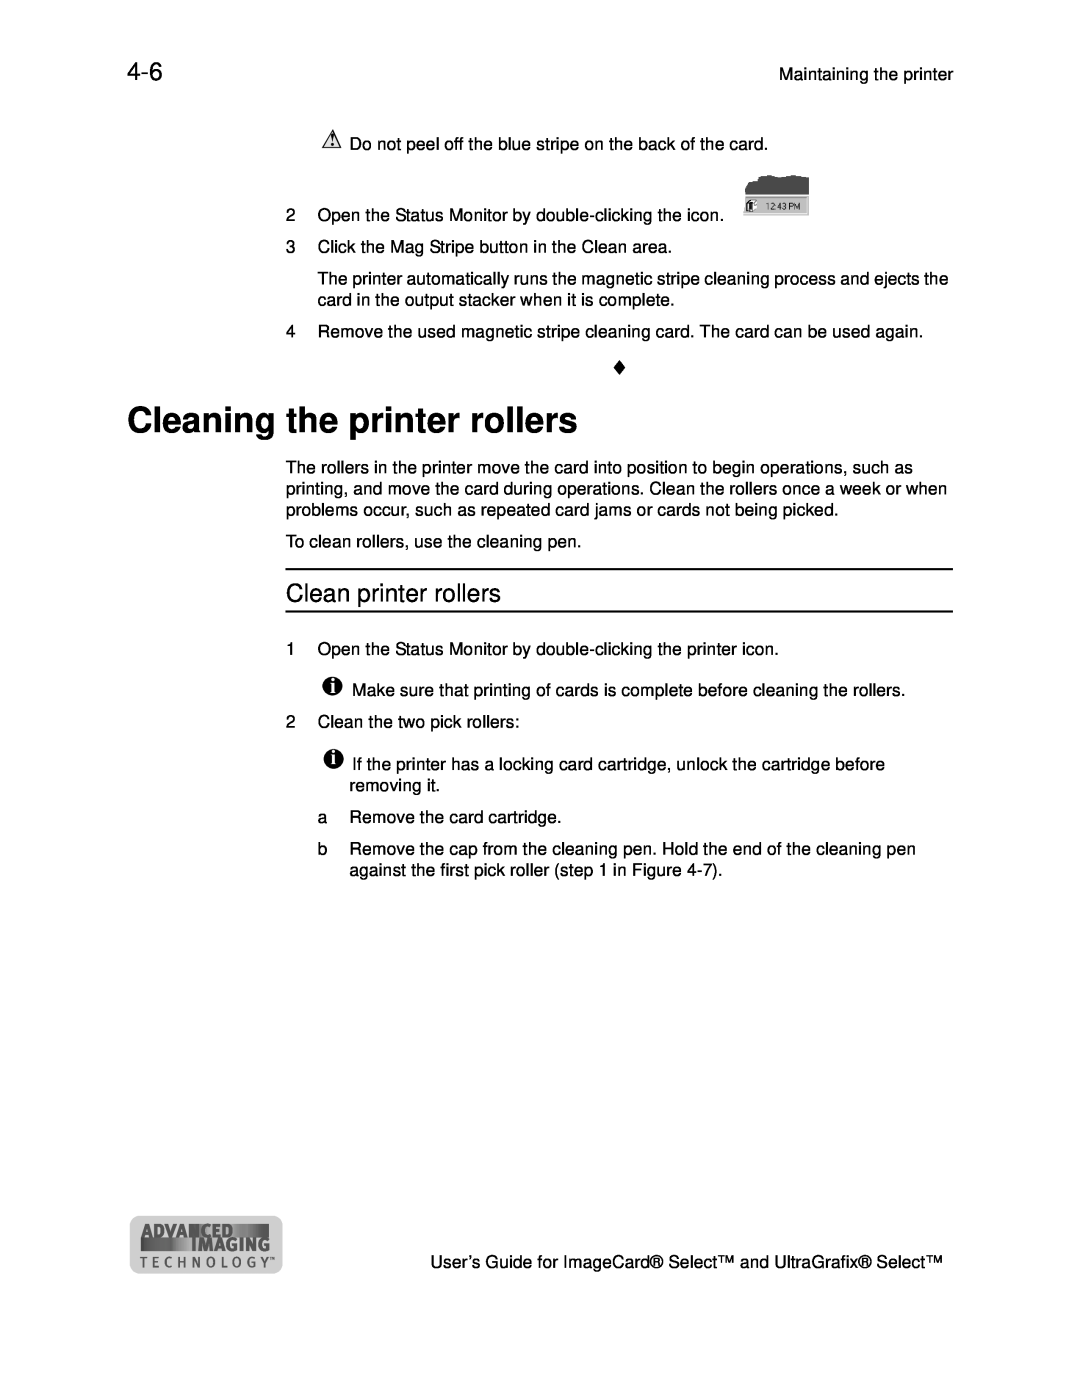 Datacard Group ImageCard SelectTM and UltraGrafix SelectTM Printers Cleaning the printer rollers, Clean printer rollers 